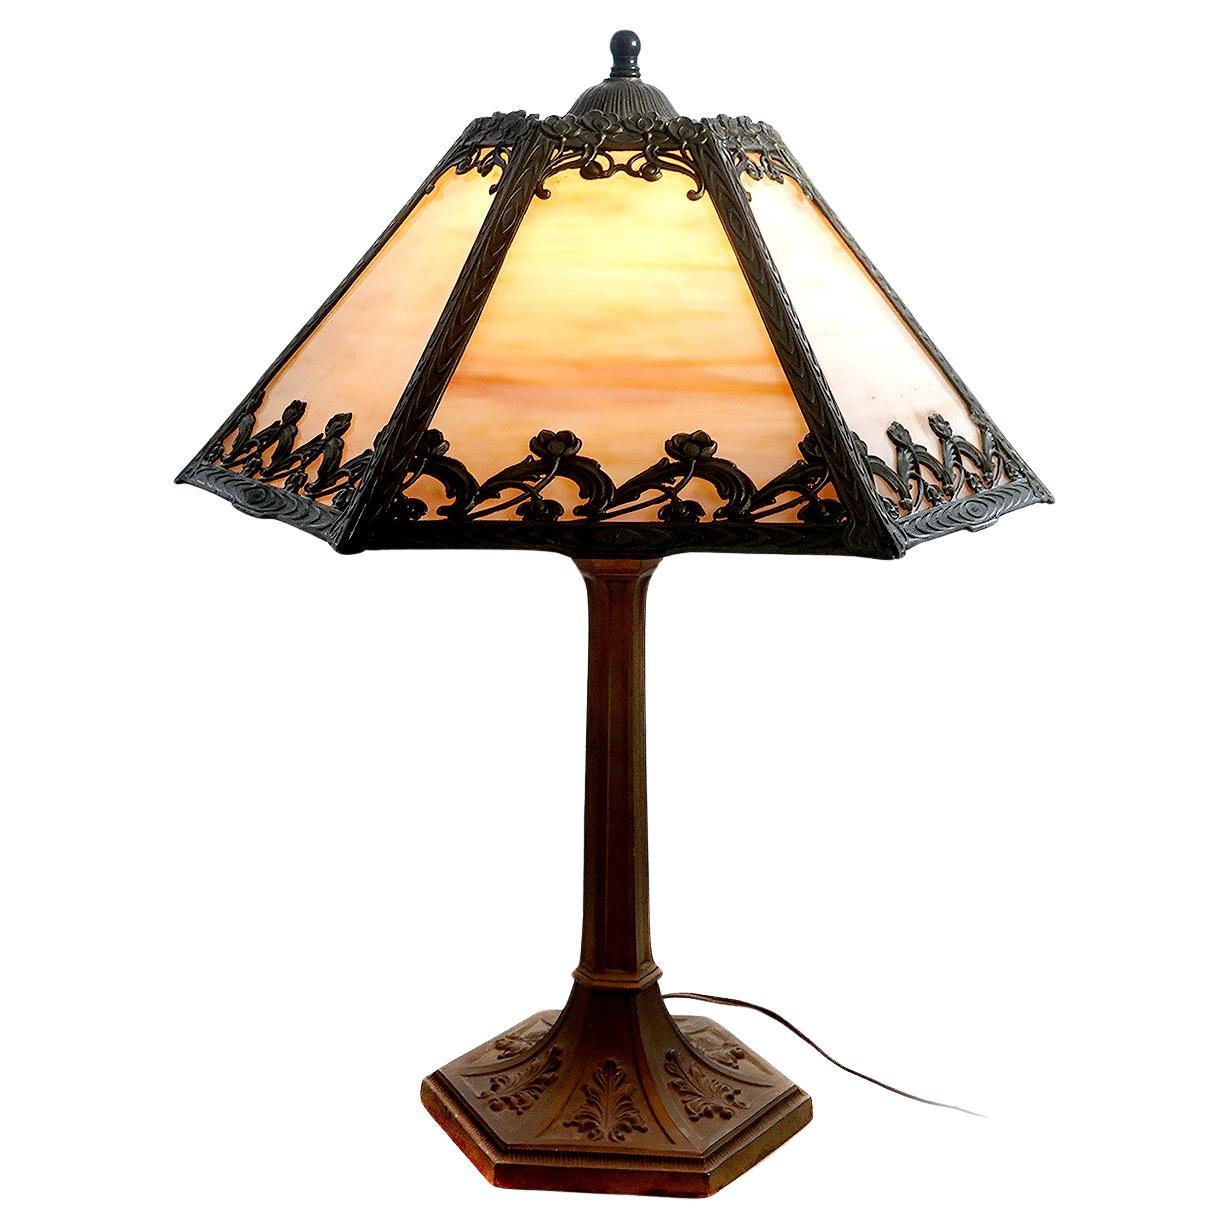 6 Tafel-Tischlampe aus Buntglas mit floralem Filigran-Overlay